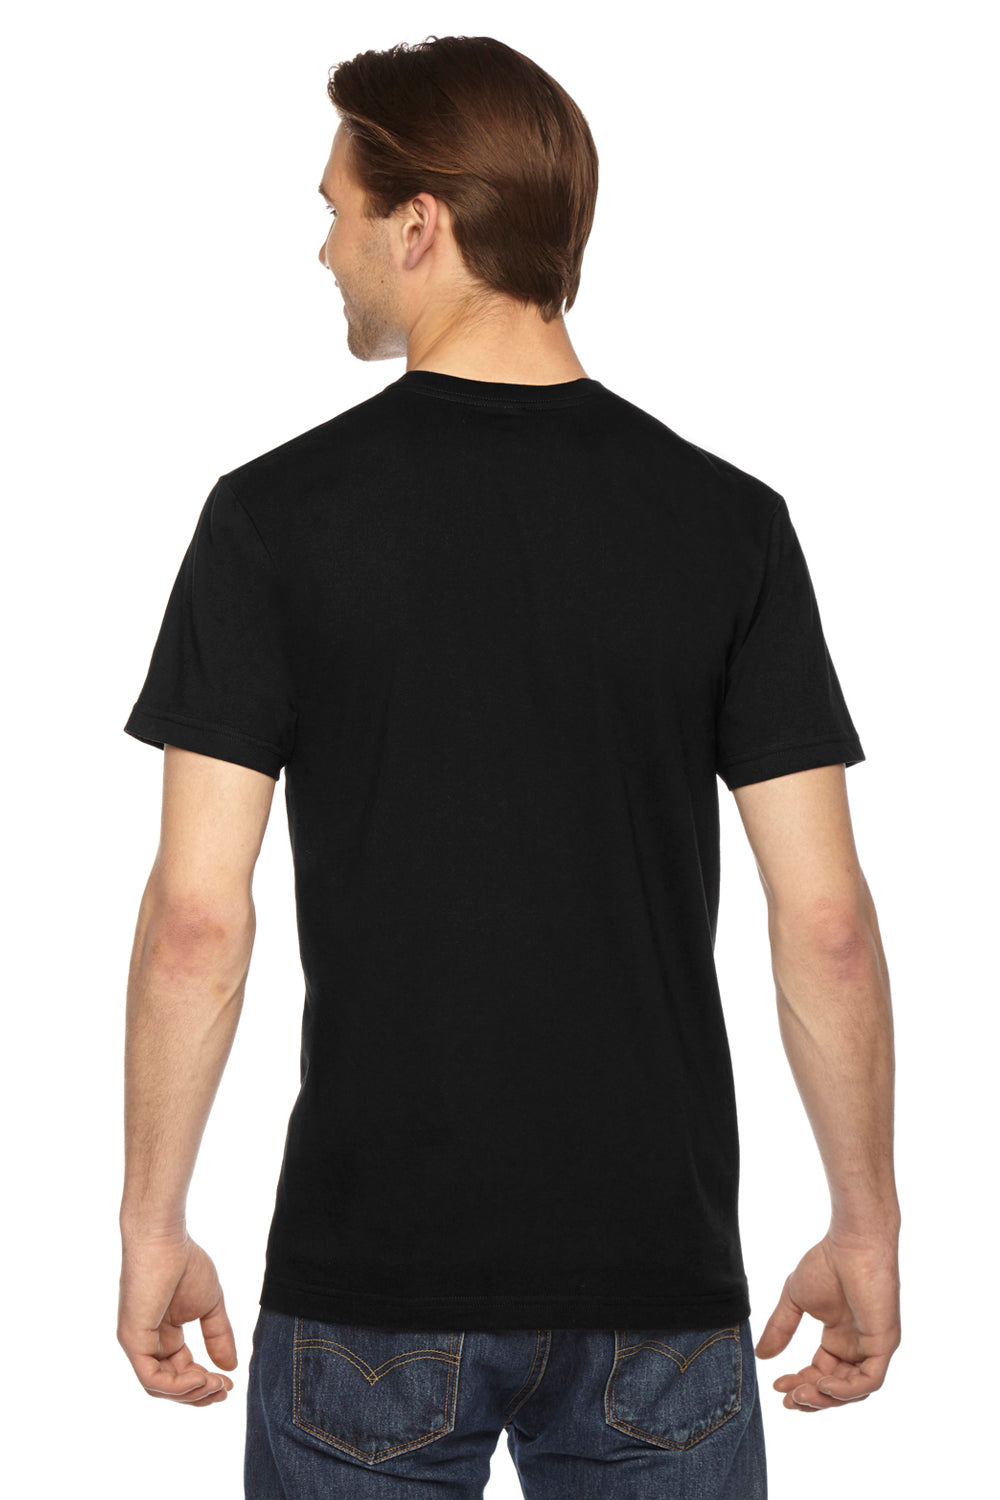 American Apparel 2001 Mens USA Made Fine Jersey Short Sleeve Crewneck T-Shirt Black Back